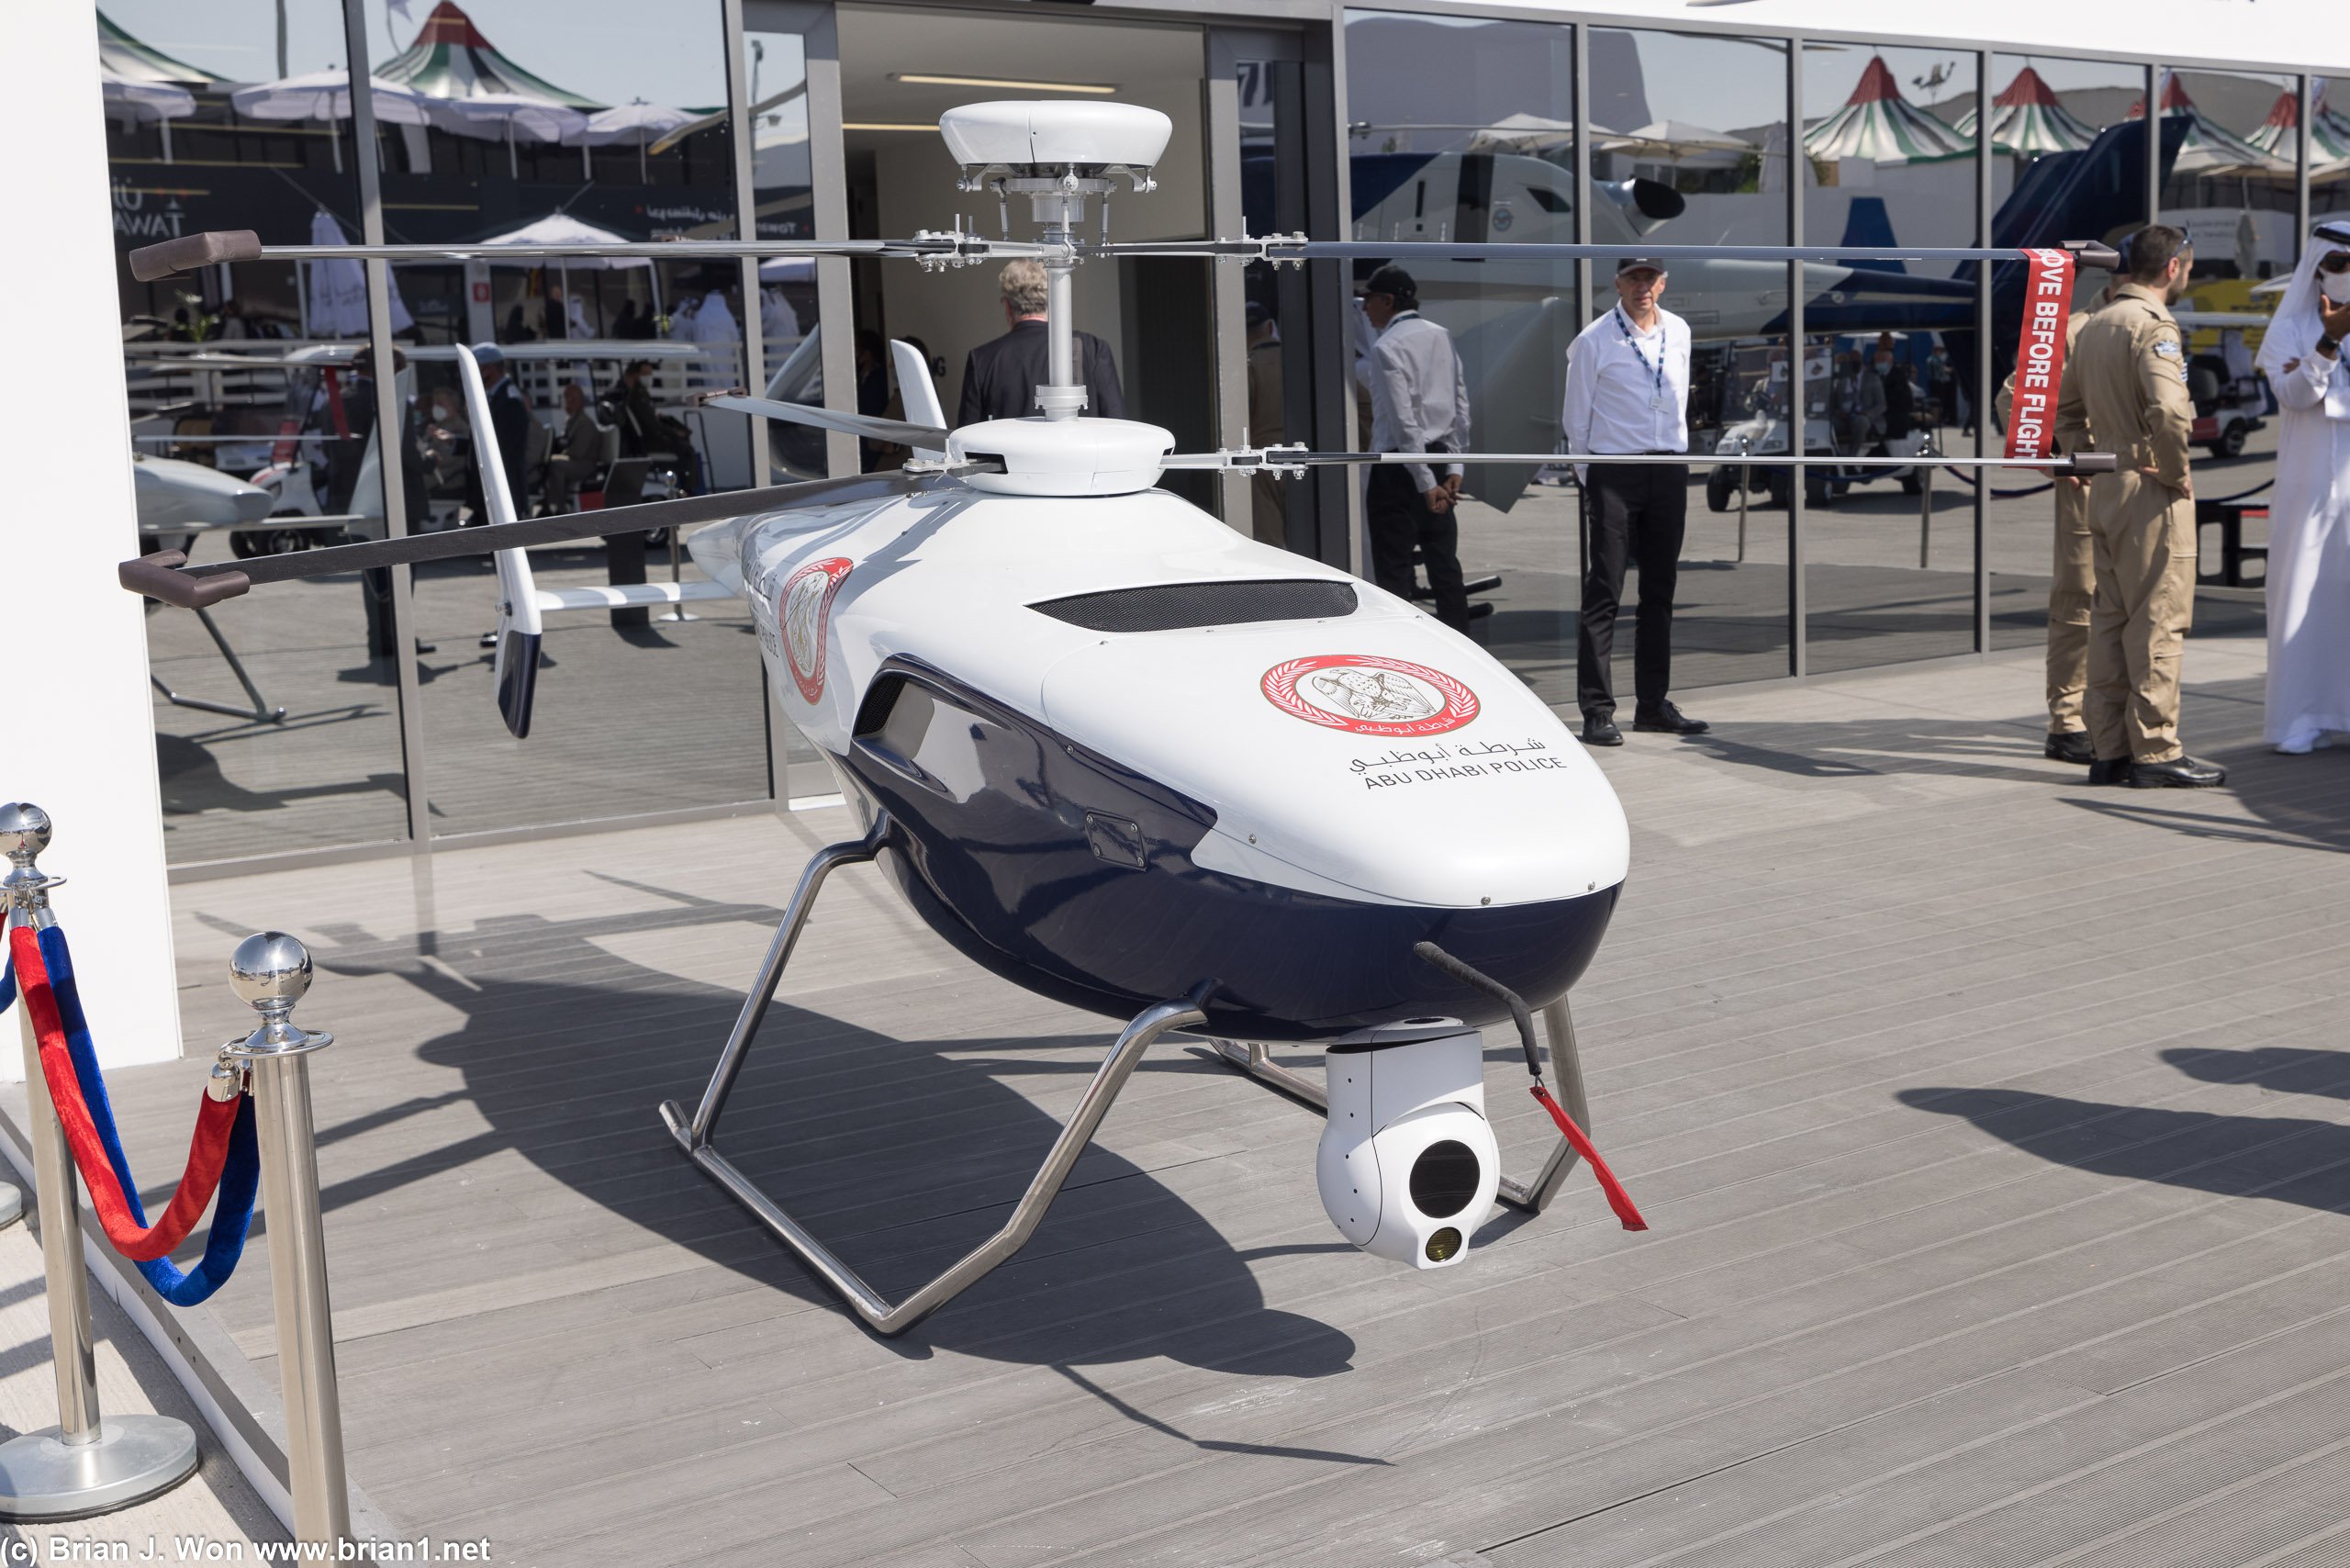 Abu Dhabi Police had their own Aeroter VRT300 drone.